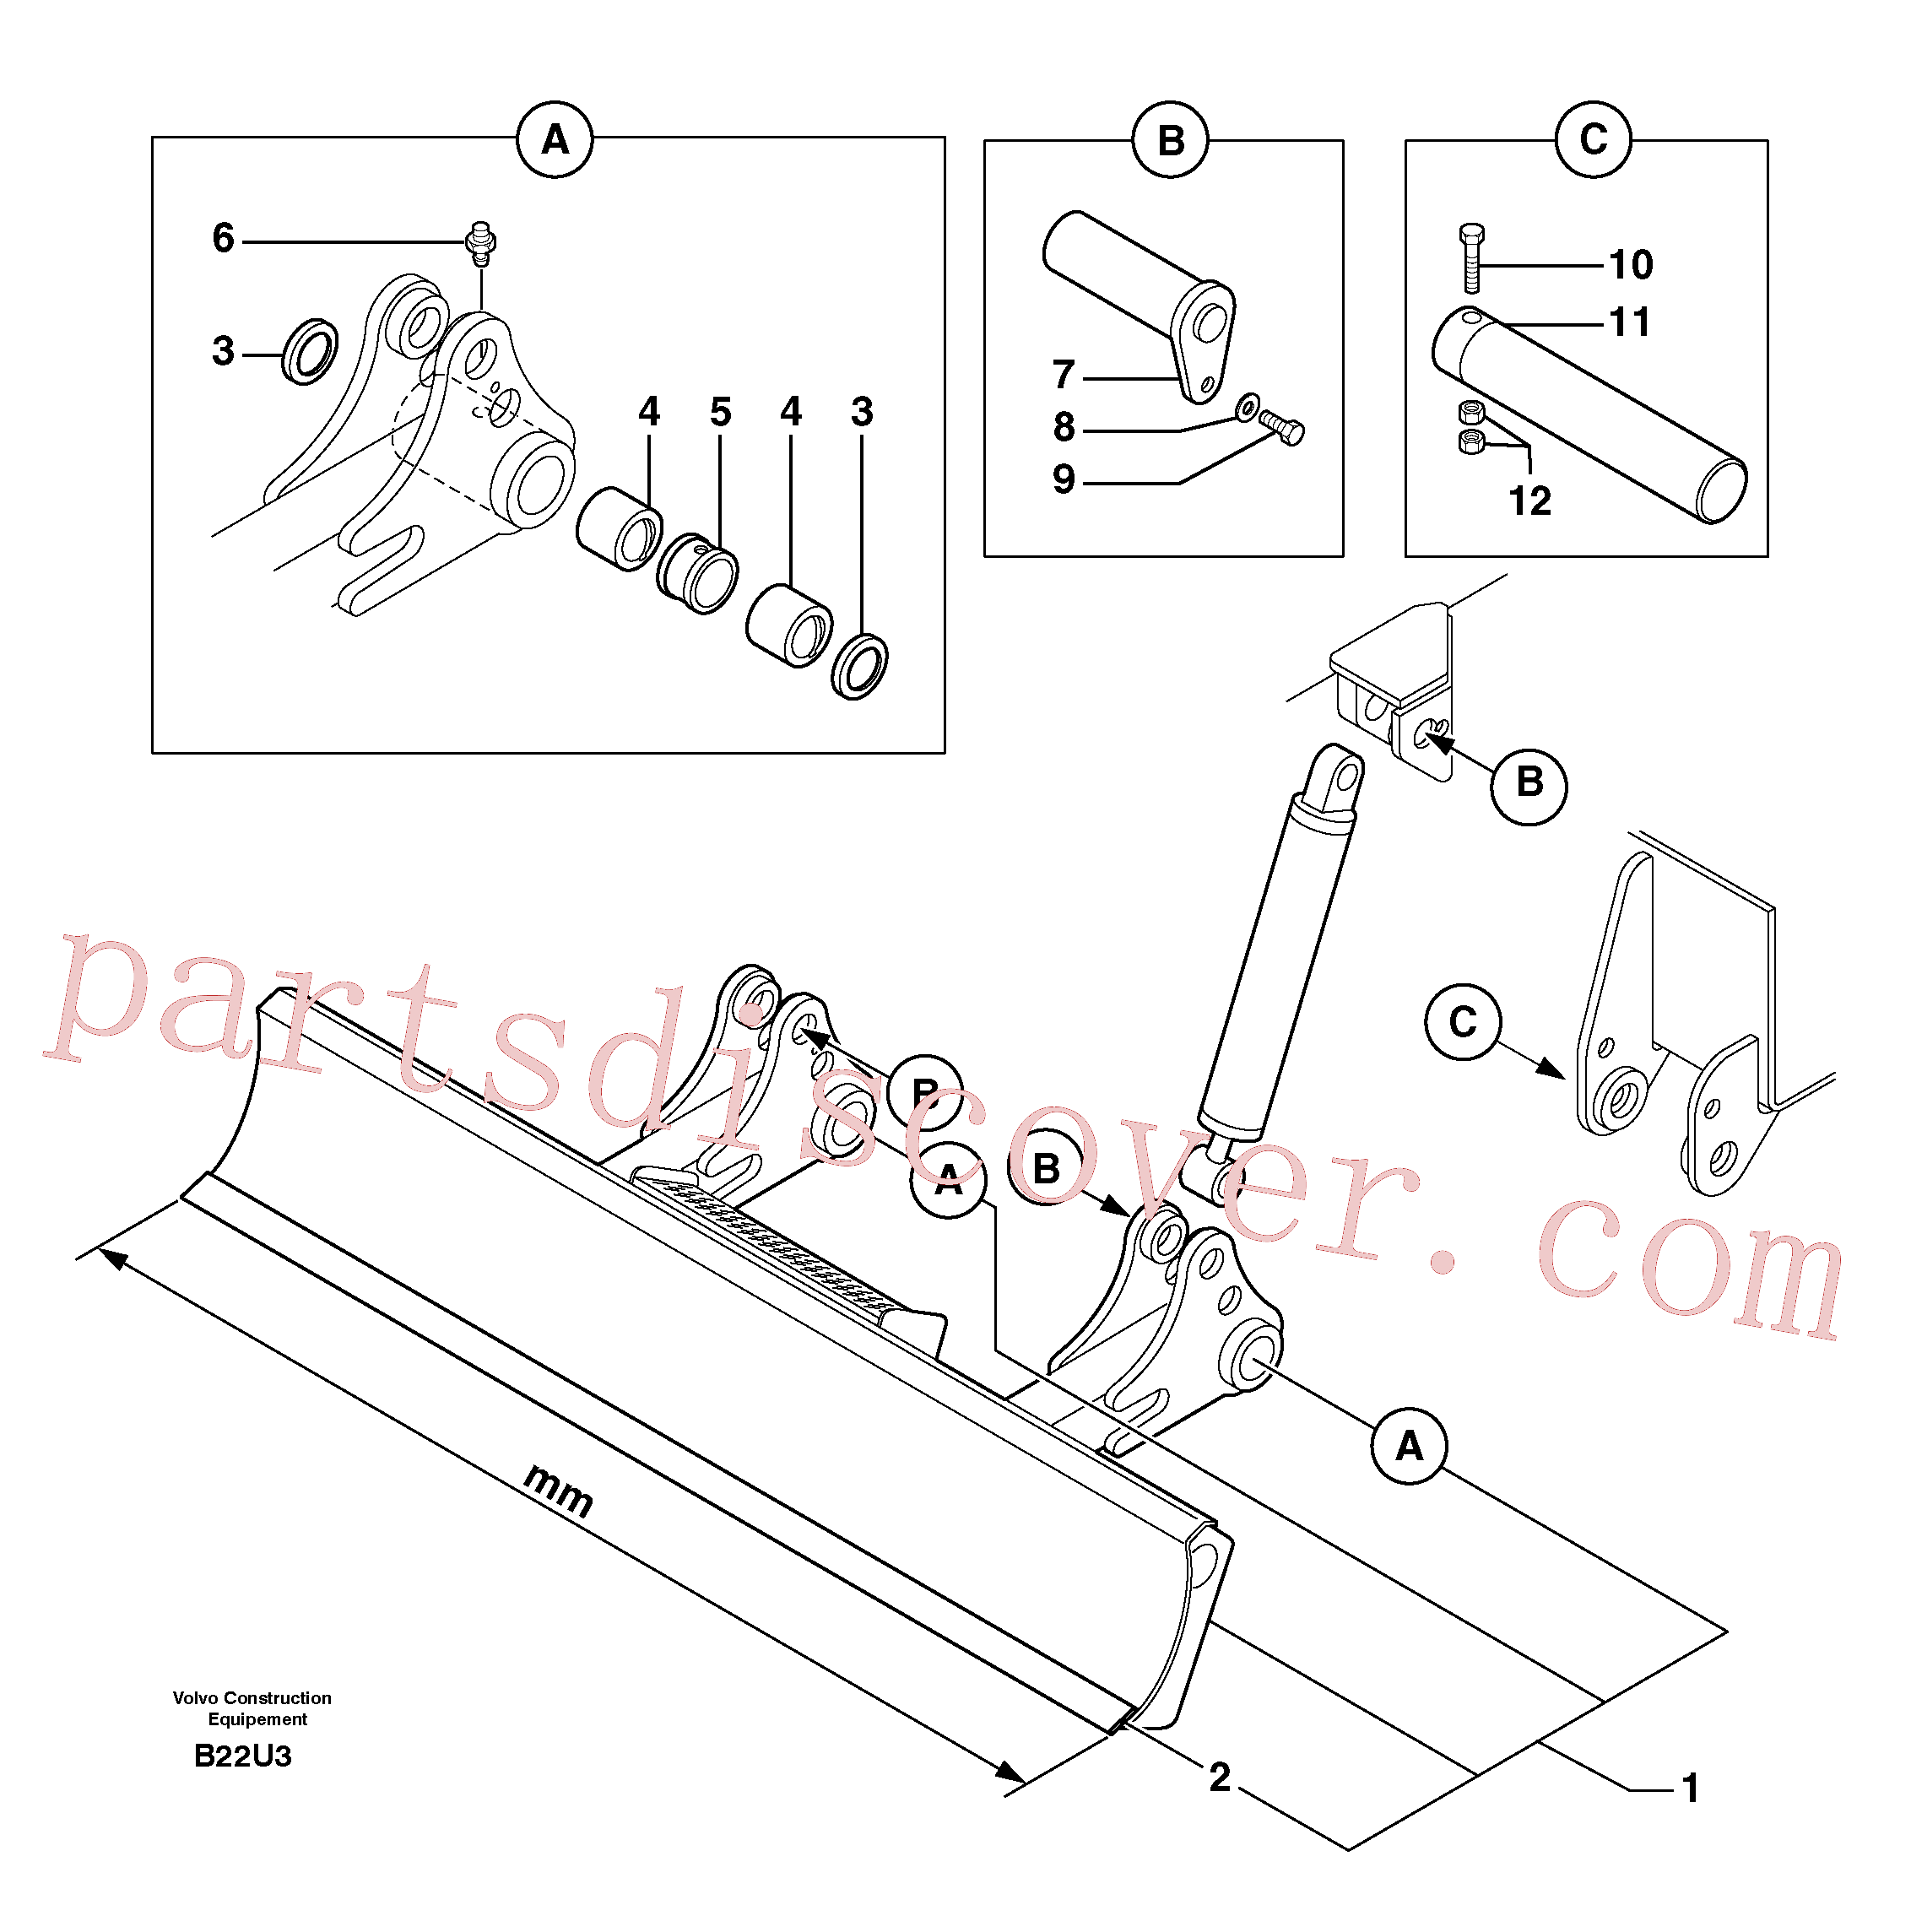 PJ6140041 for Volvo Dozer blade(B22U3 assembly)